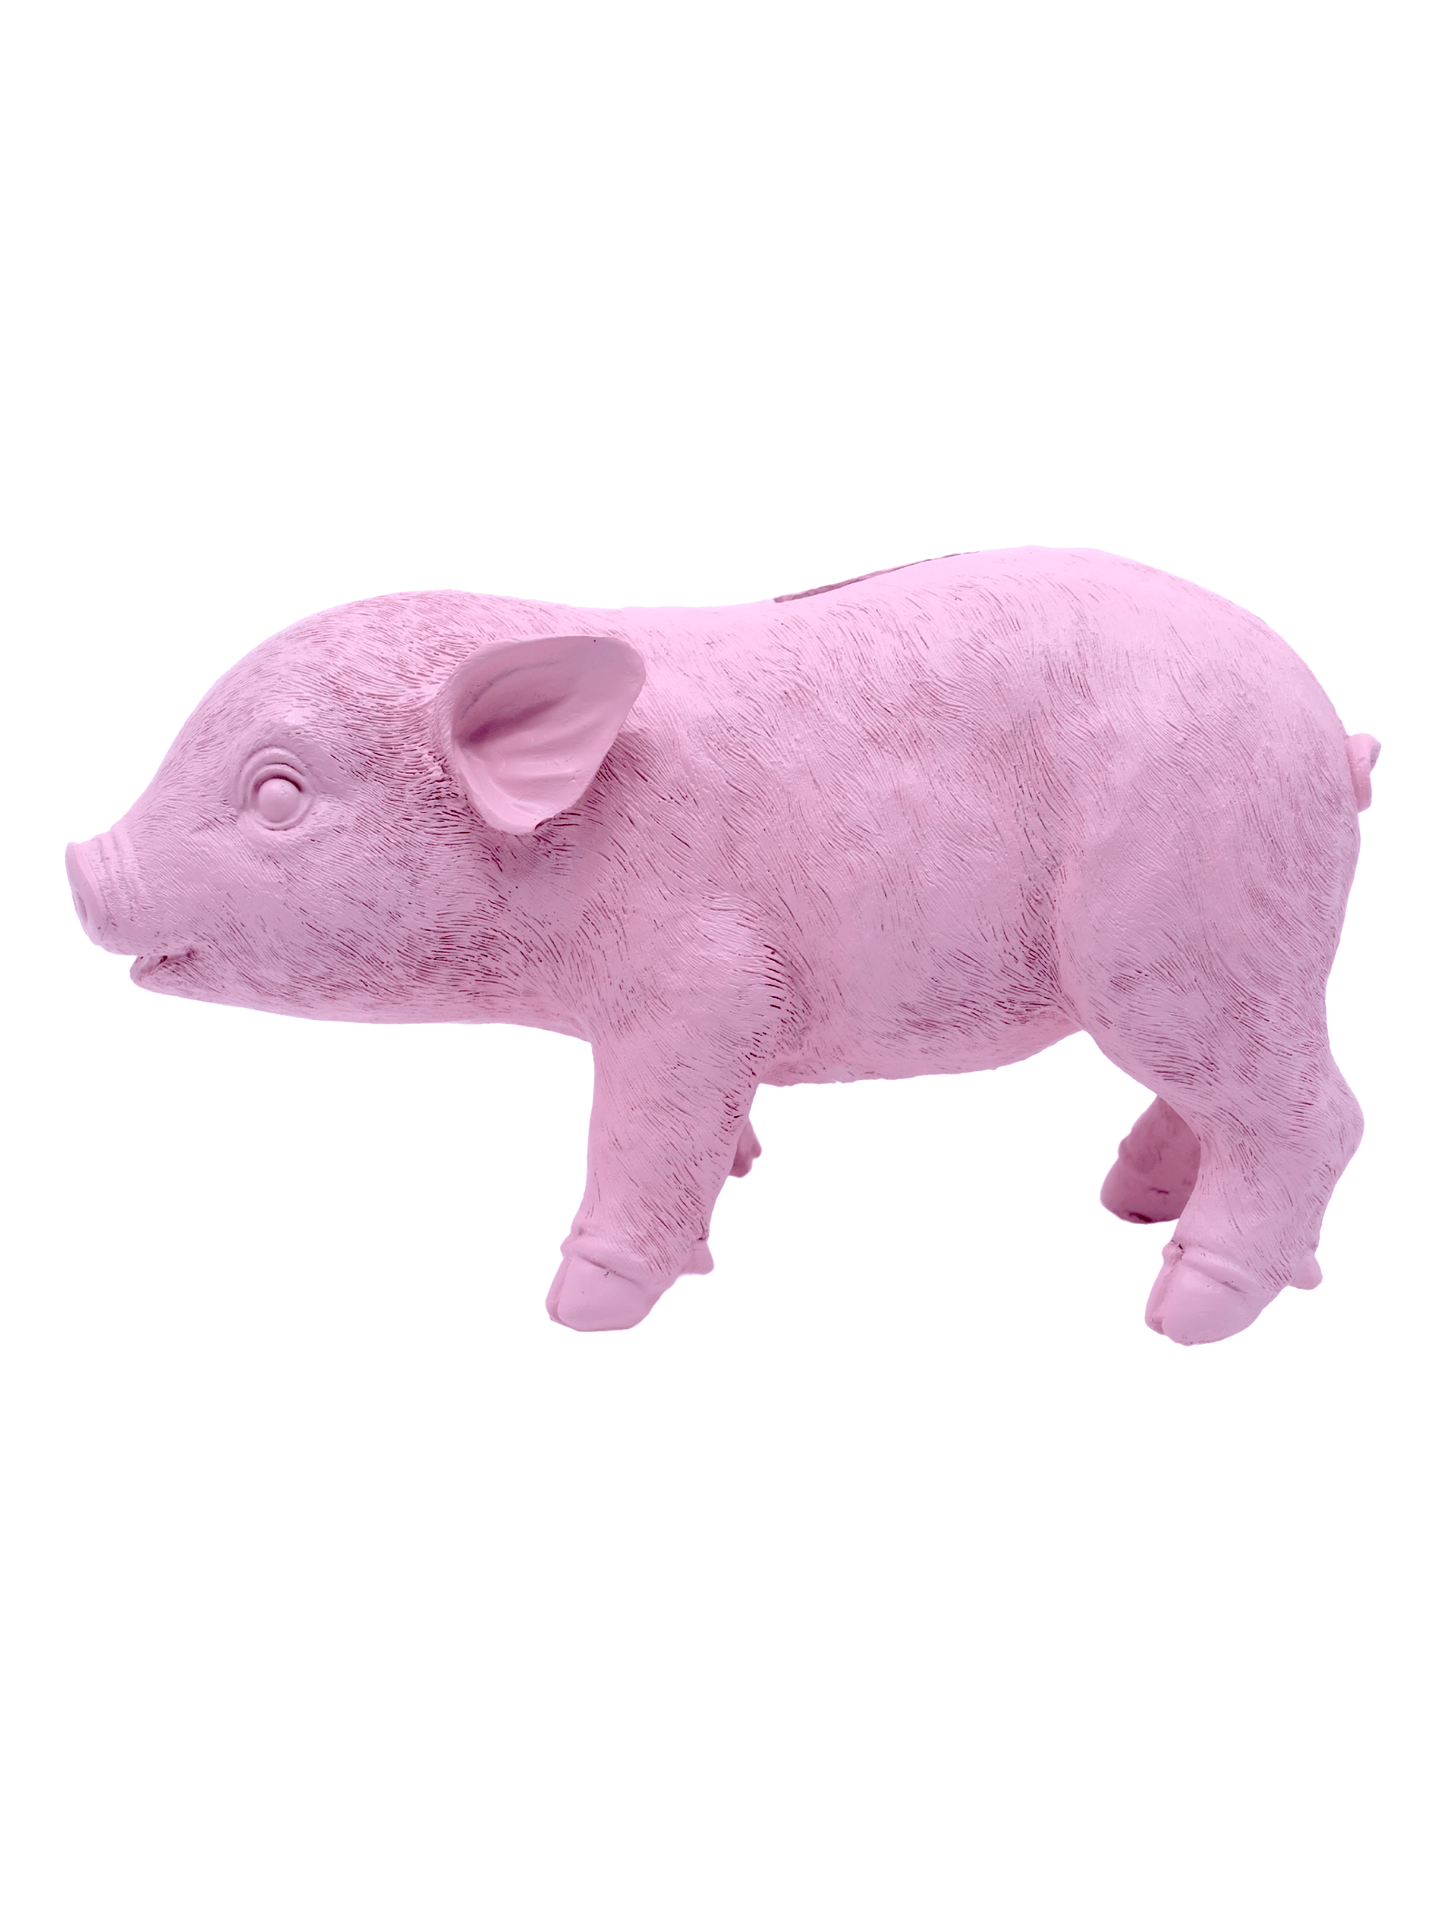 Pink Pig Money Box Resin